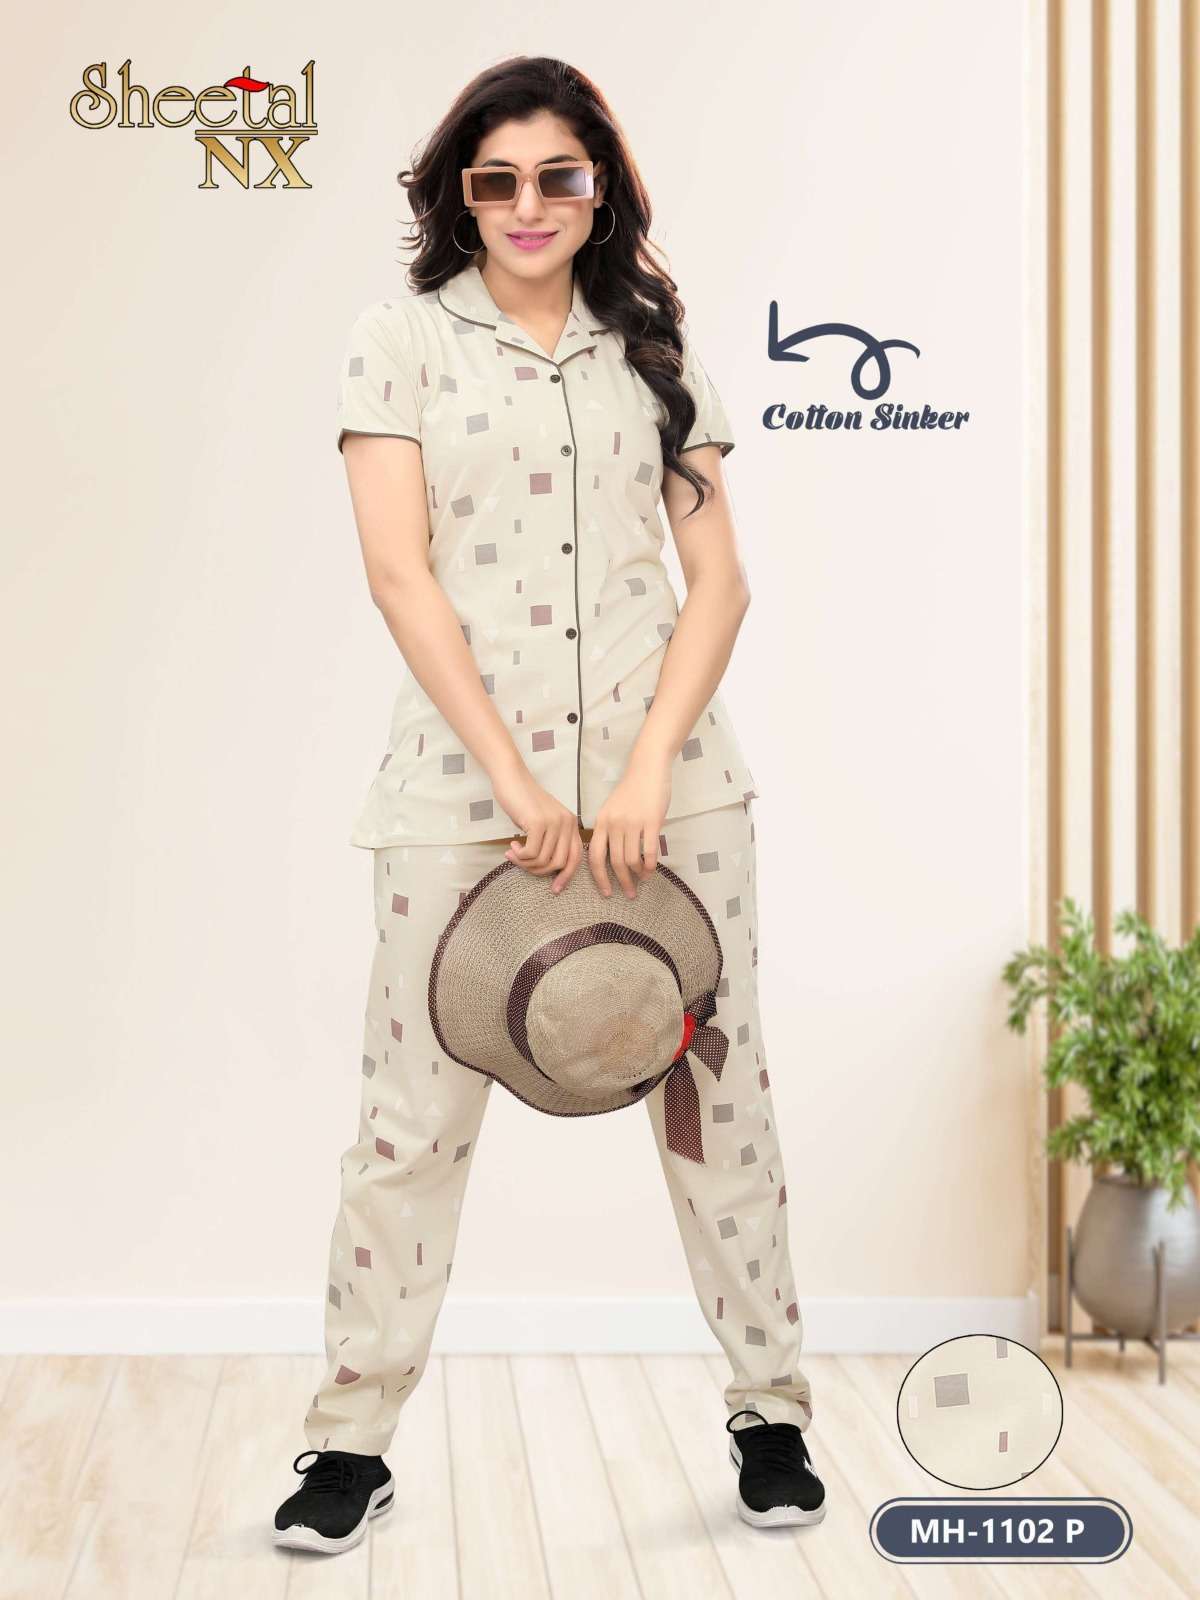 Sunita-Nx ex.innerwear & nightwear designer studio - Jockey sports